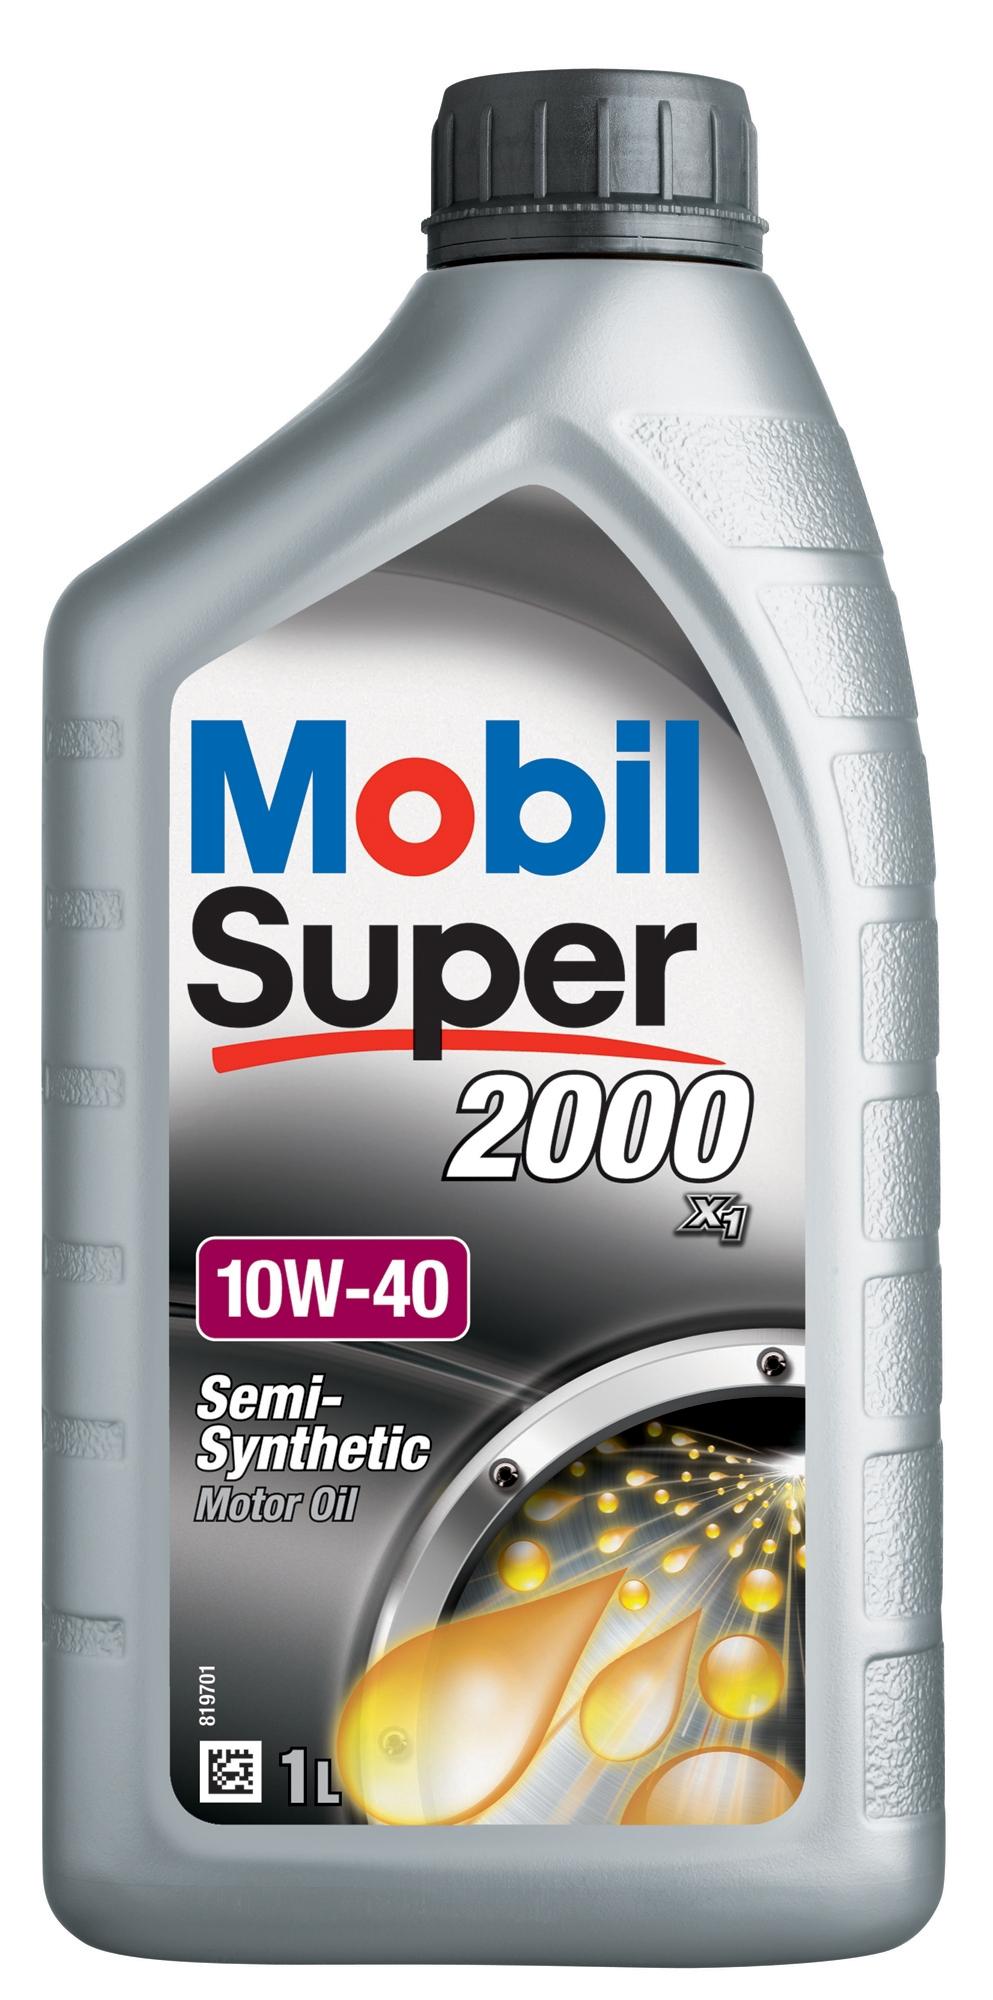 Mobil Super 2000 X1 10W/40 Oil 1L